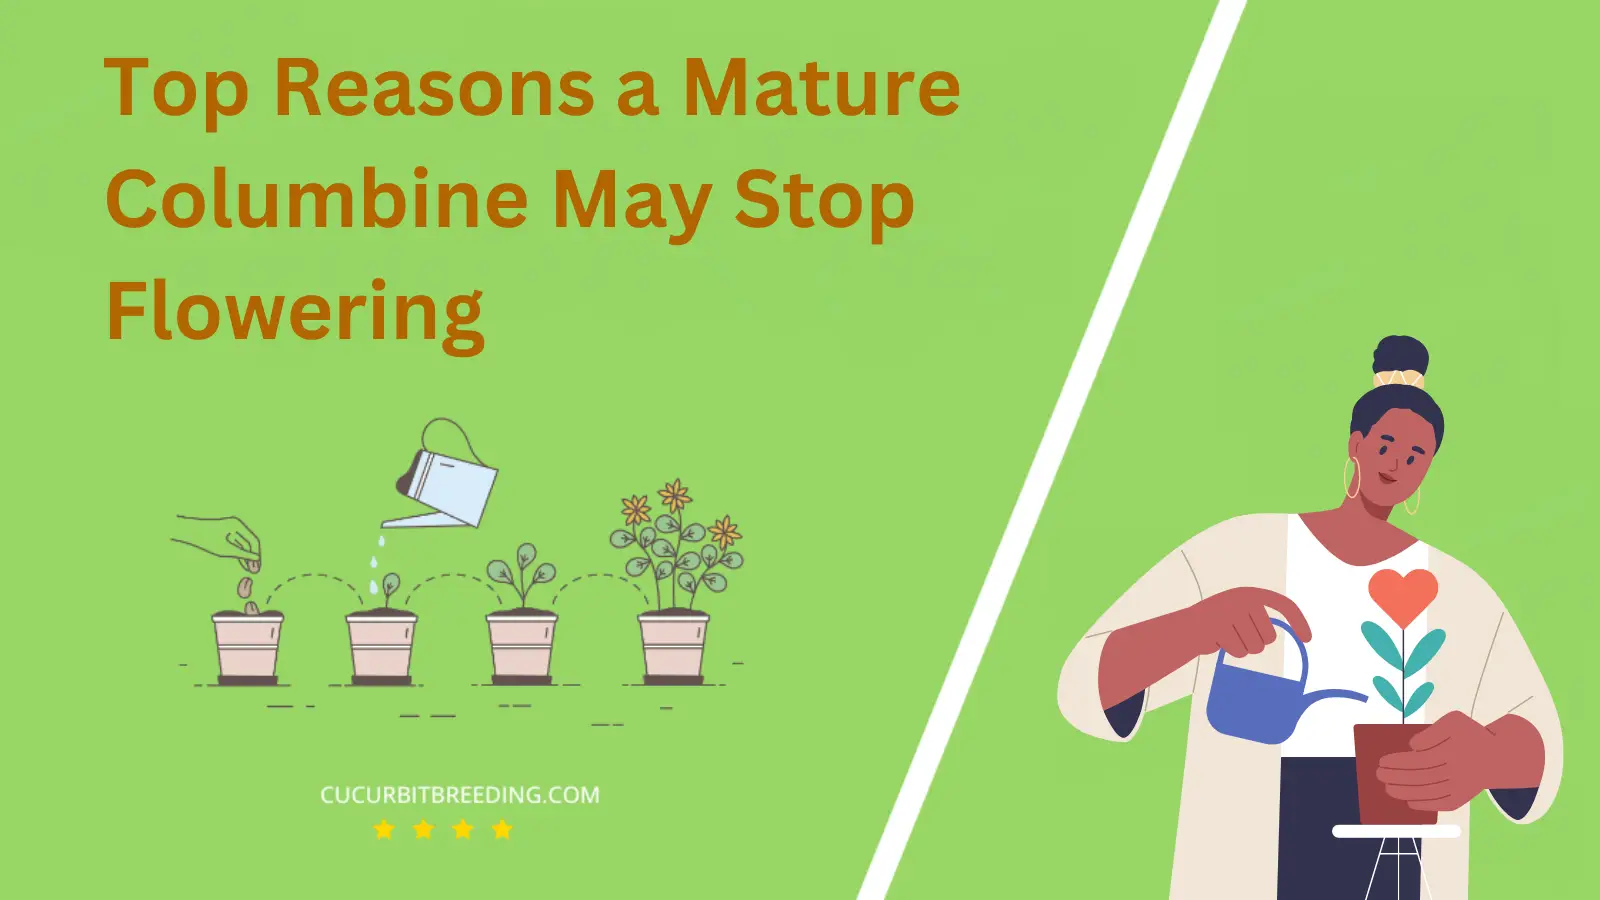 Top Reasons a Mature Columbine May Stop Flowering